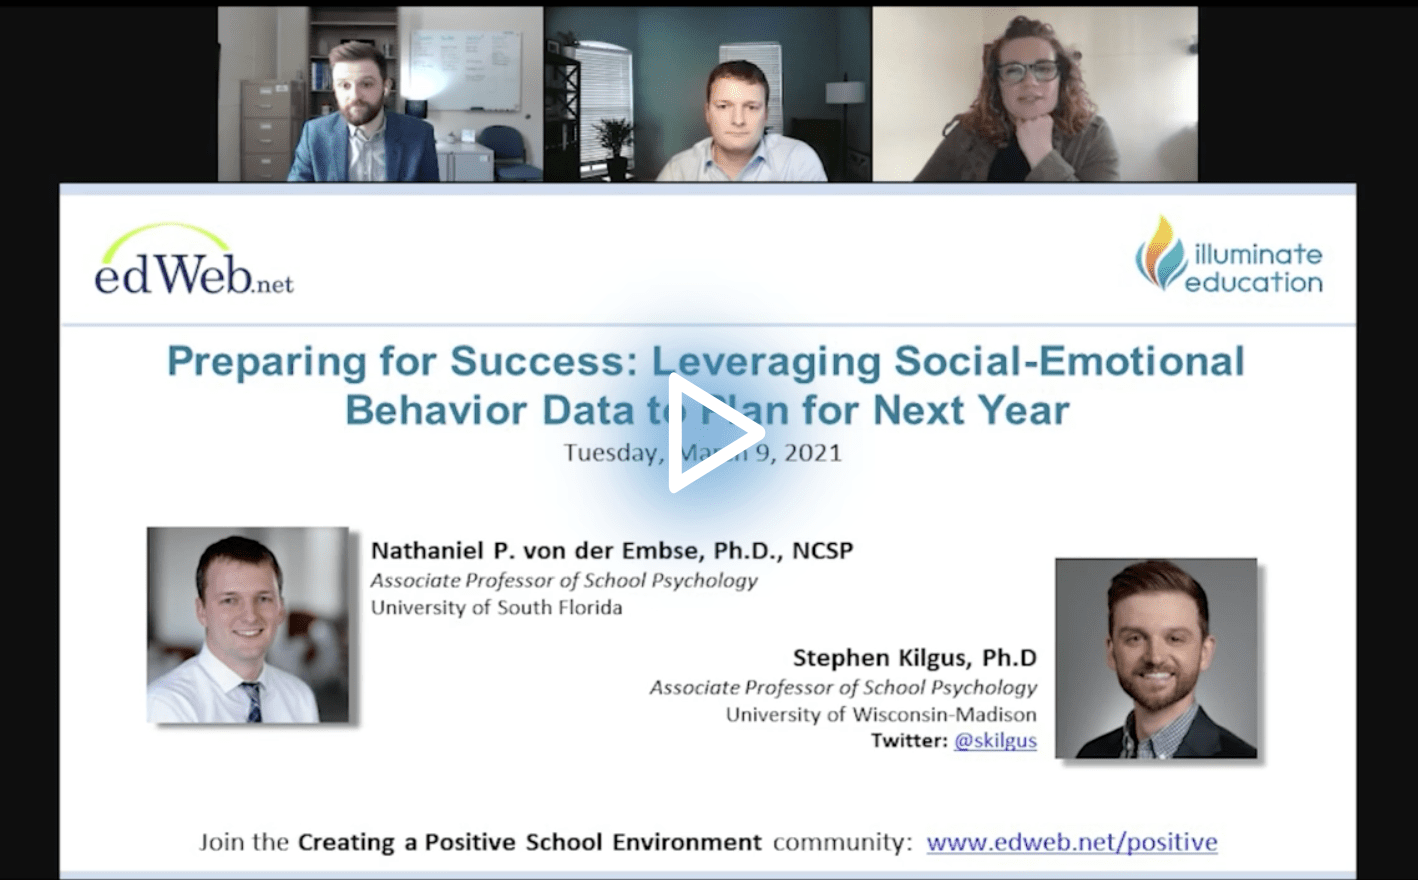 Preparing for Success: Leveraging Social-Emotional Behavior Data to Plan for Next Year edLeader Panel recording link